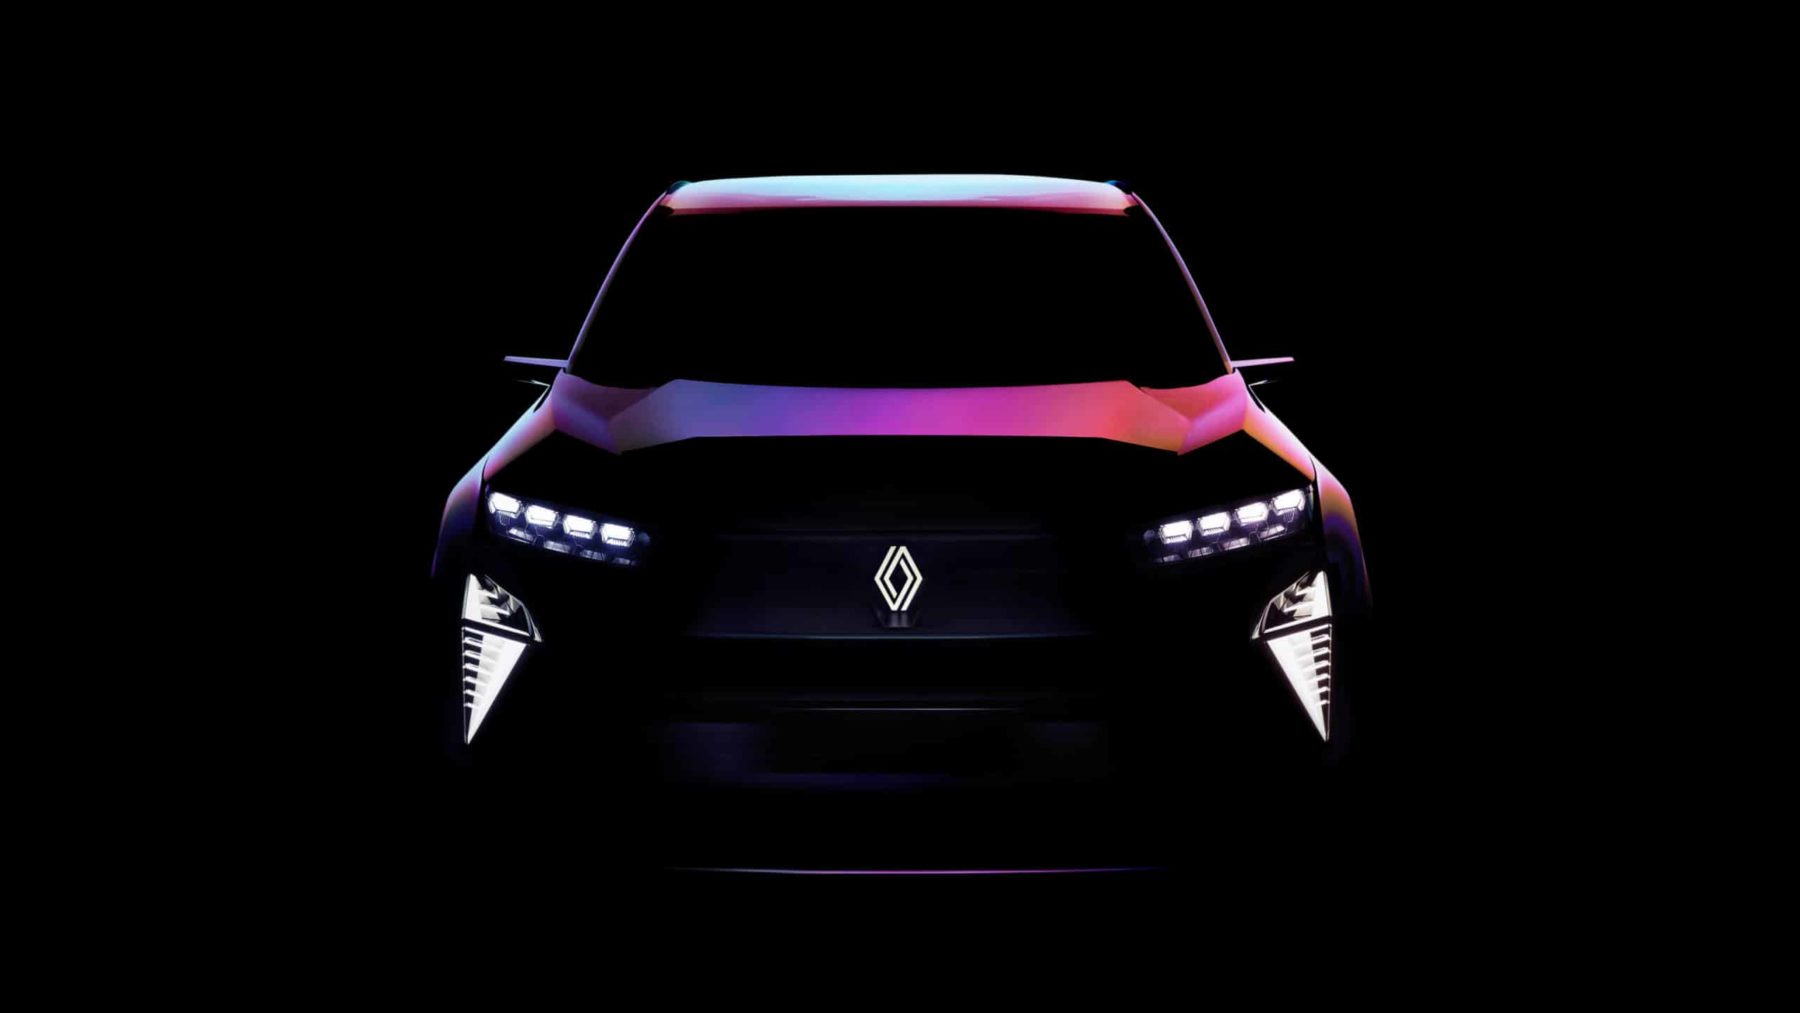 Zukünftiges Renault Konzeptfahrzeug